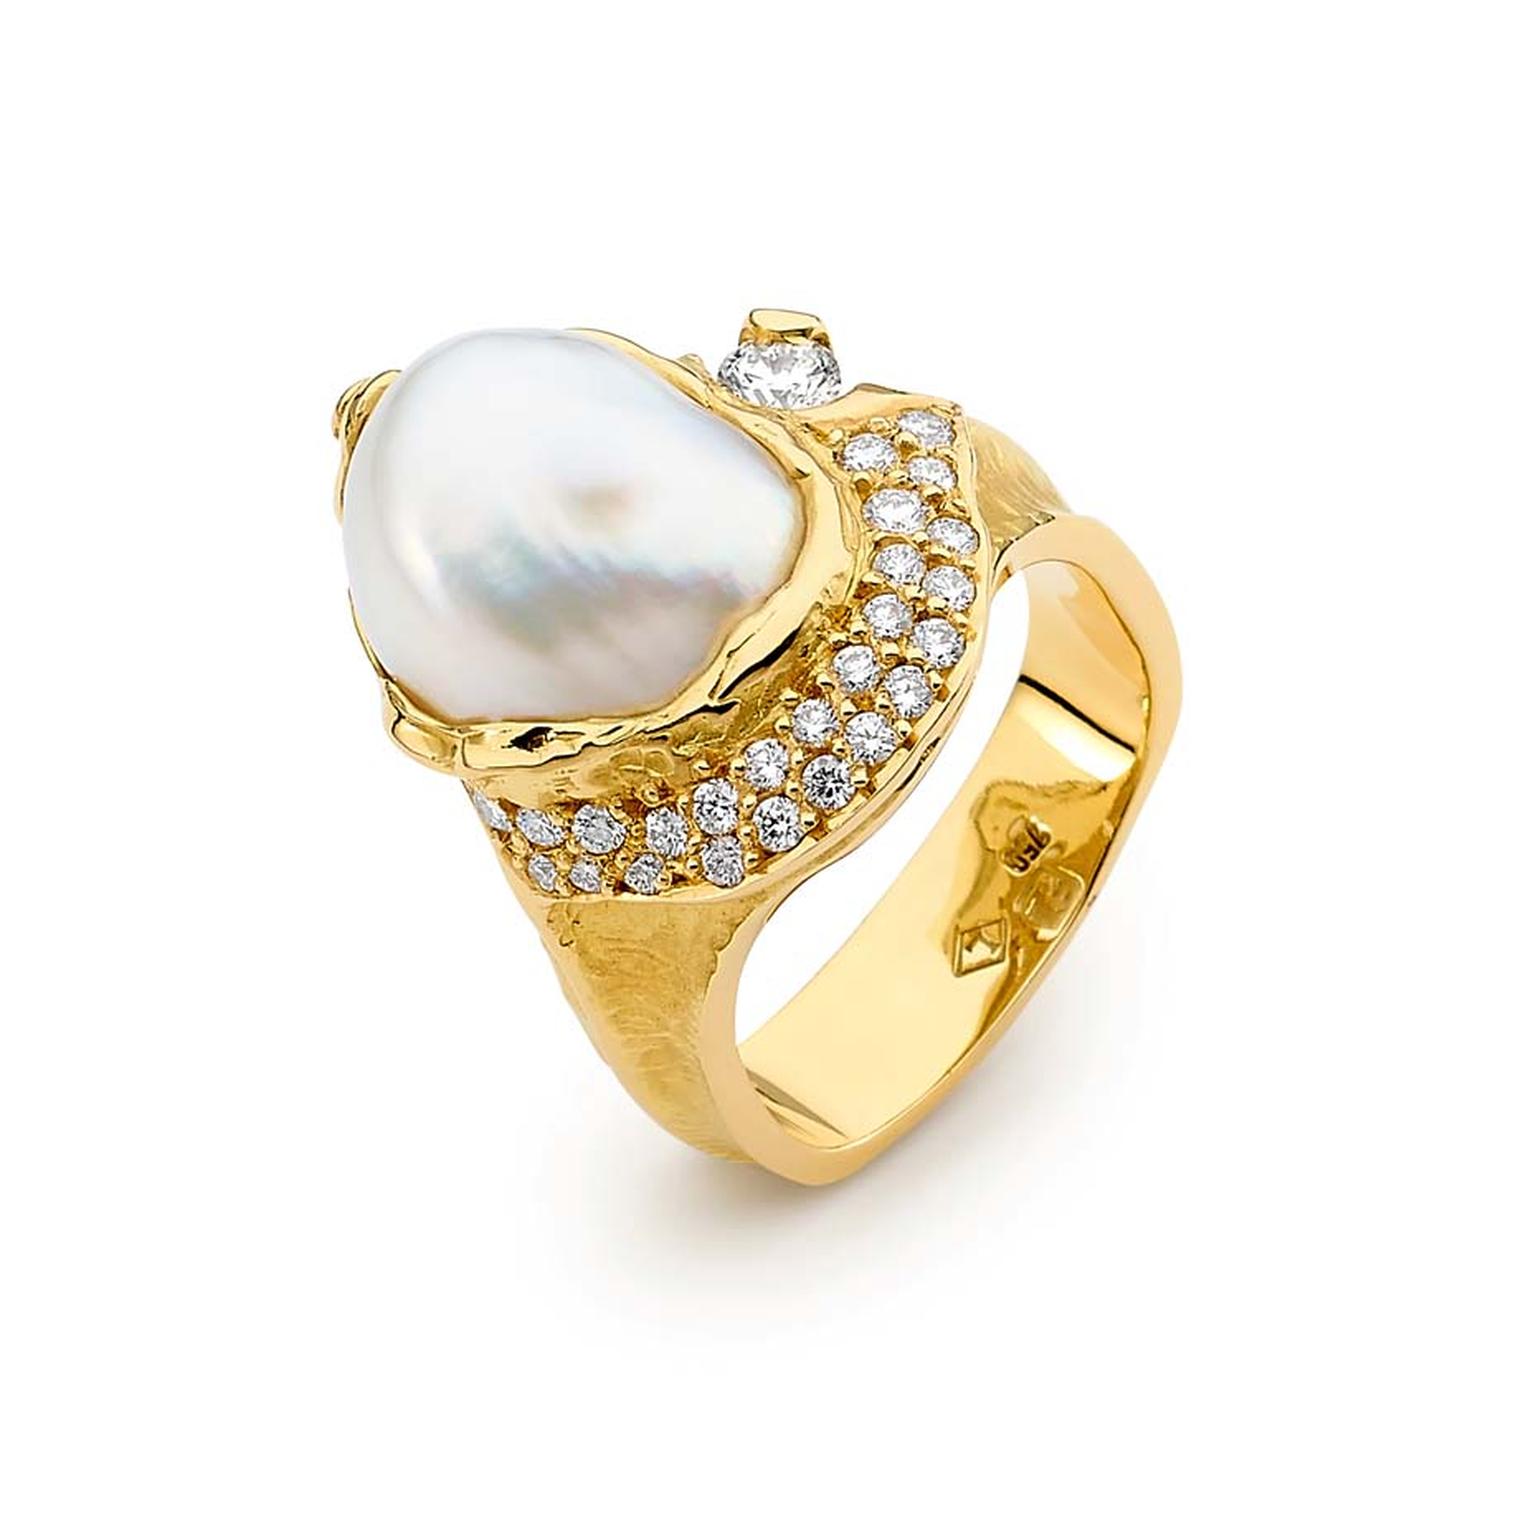 Australian Pearls_Linneys_18ct yellow gold Australian South Sea seedless pearl and diamond ring $7,900.jpg